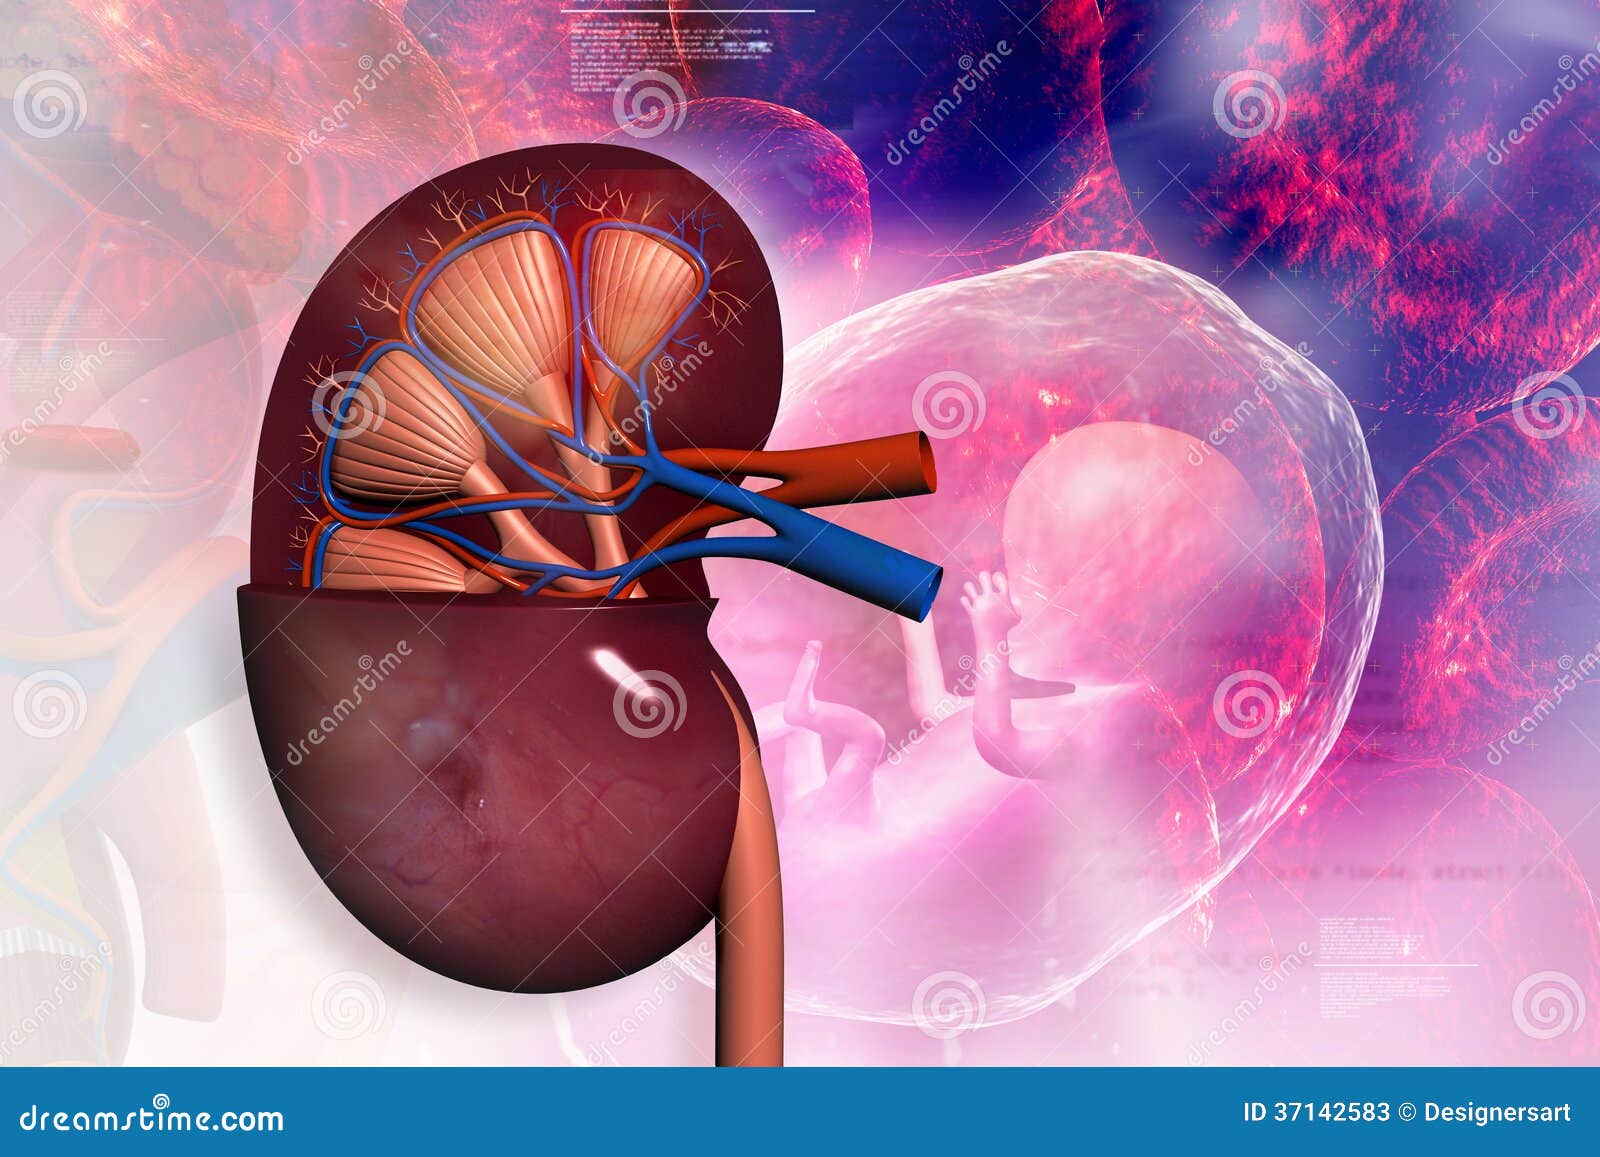 Human Kidney Stock Photos - Image: 37142583